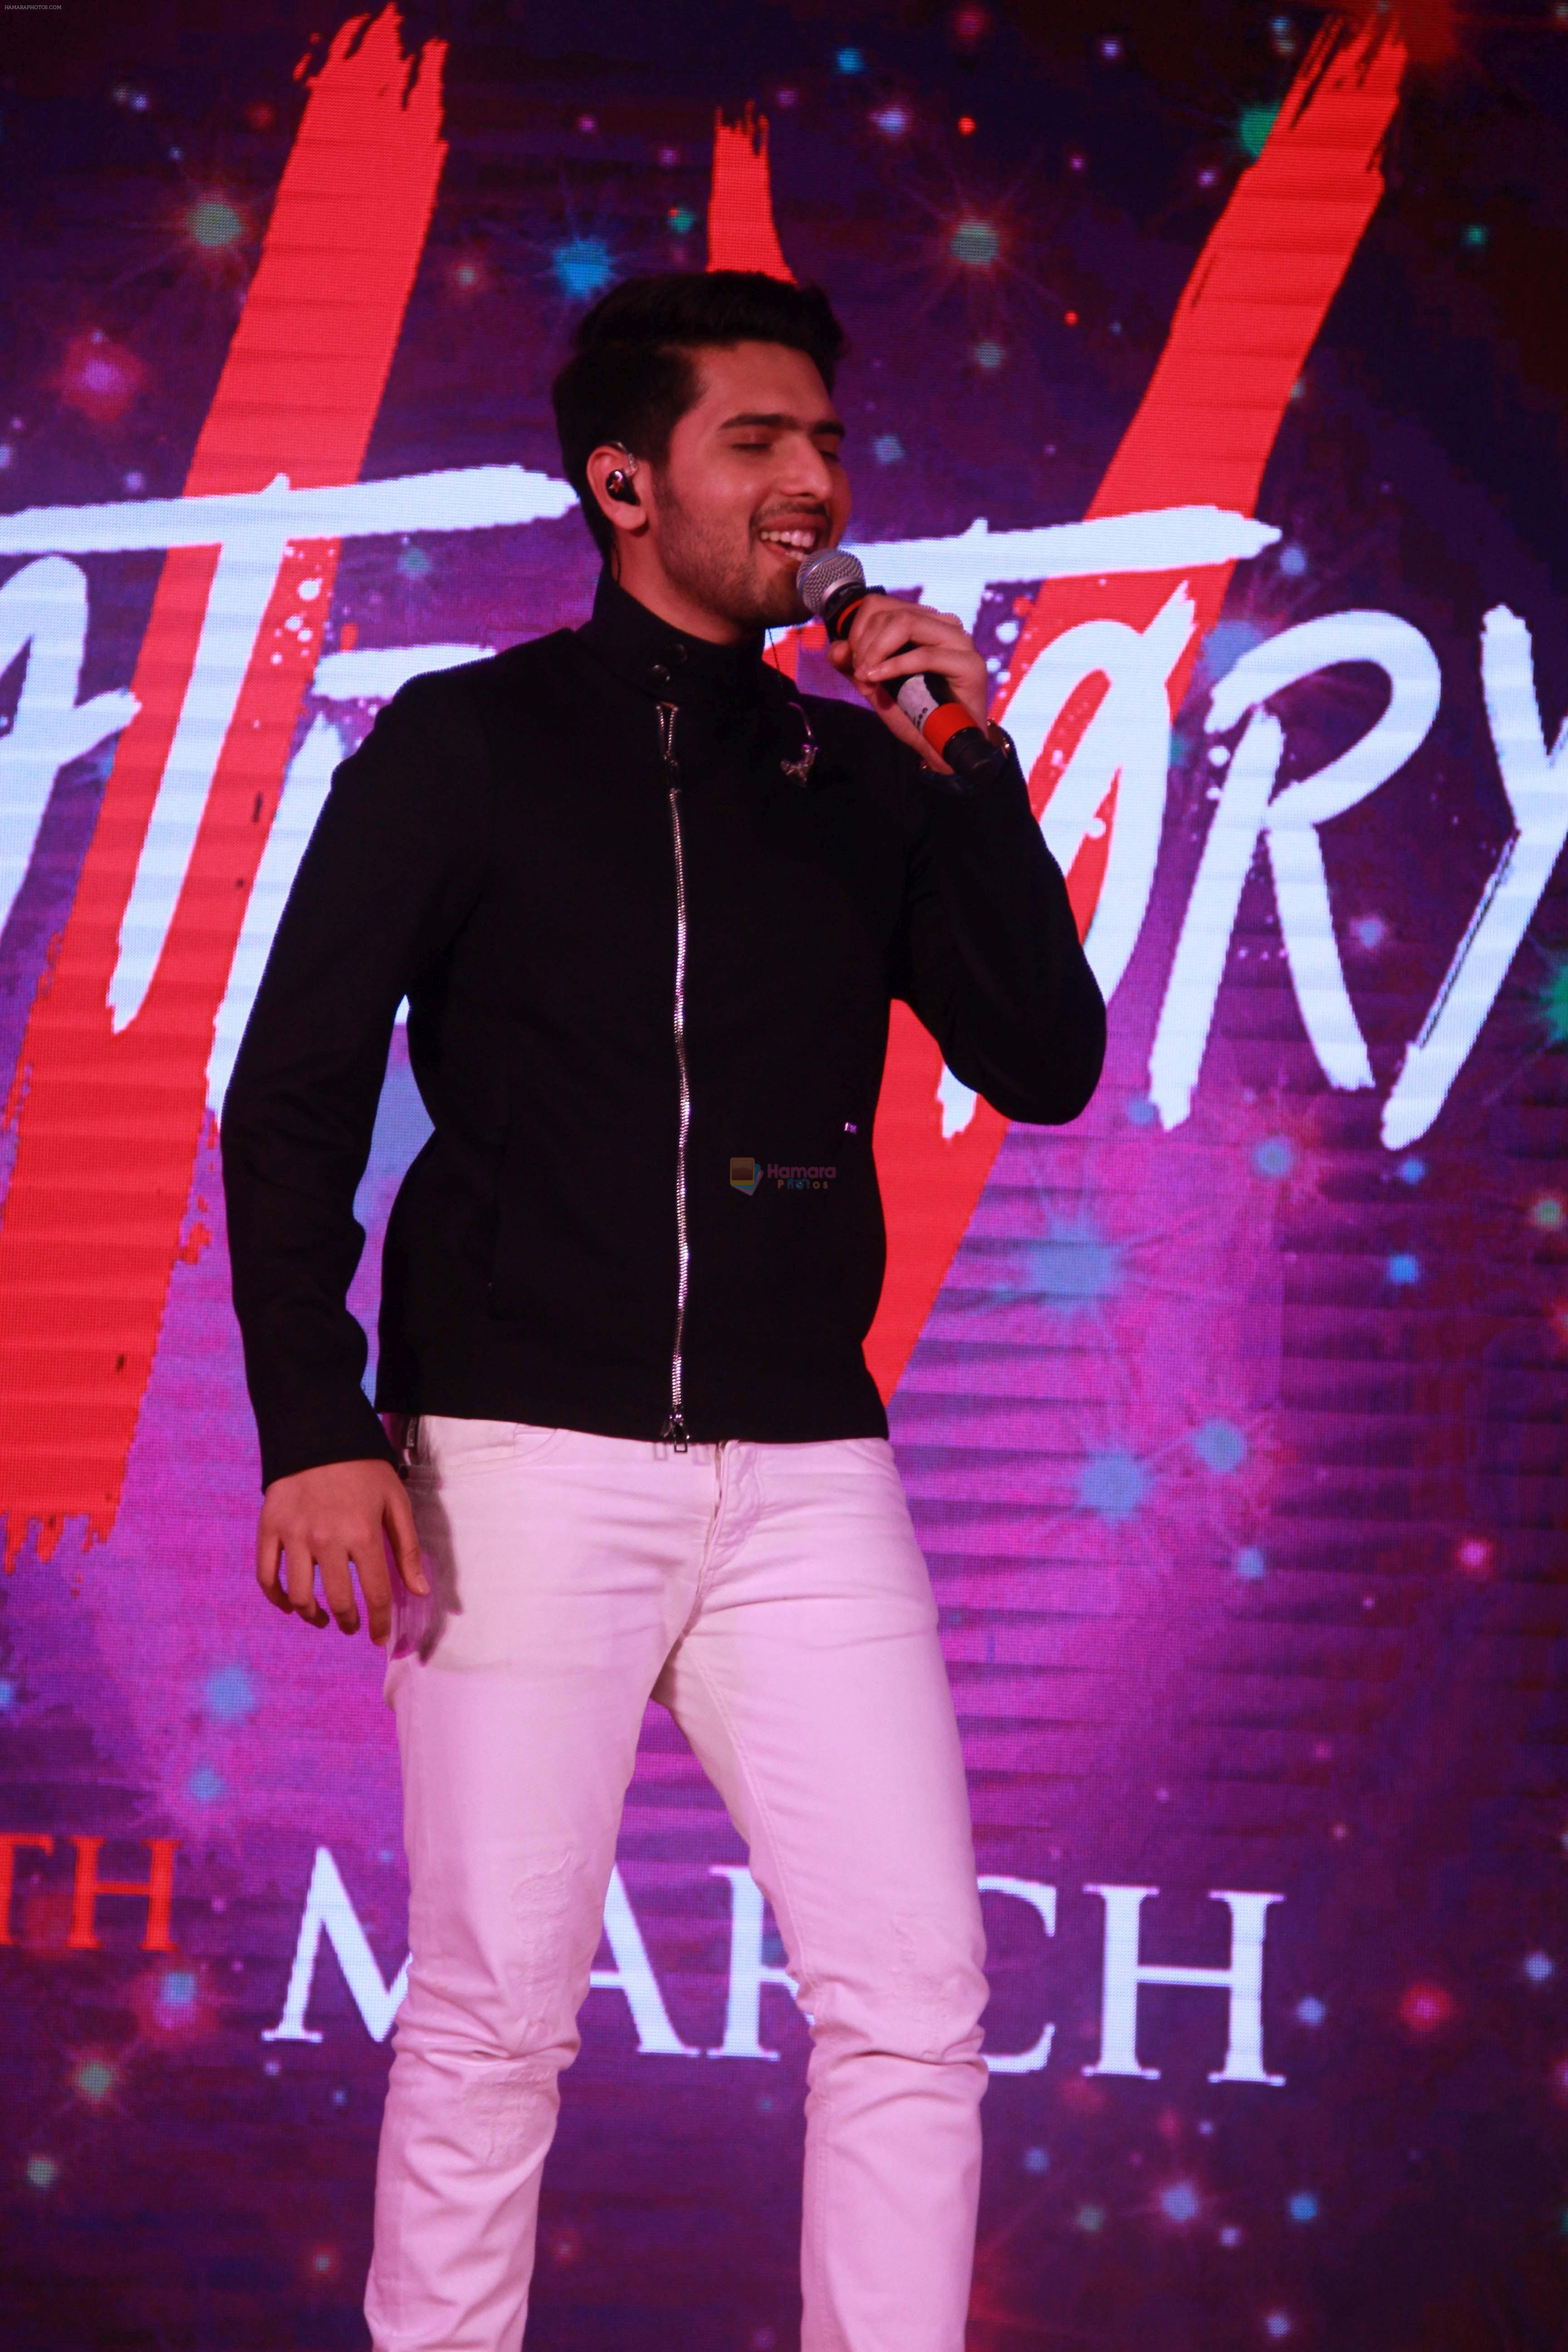 Armaan Malik at Hate story 4 music concert at R city mall ghatkopar, mumbai on 4th March 2018